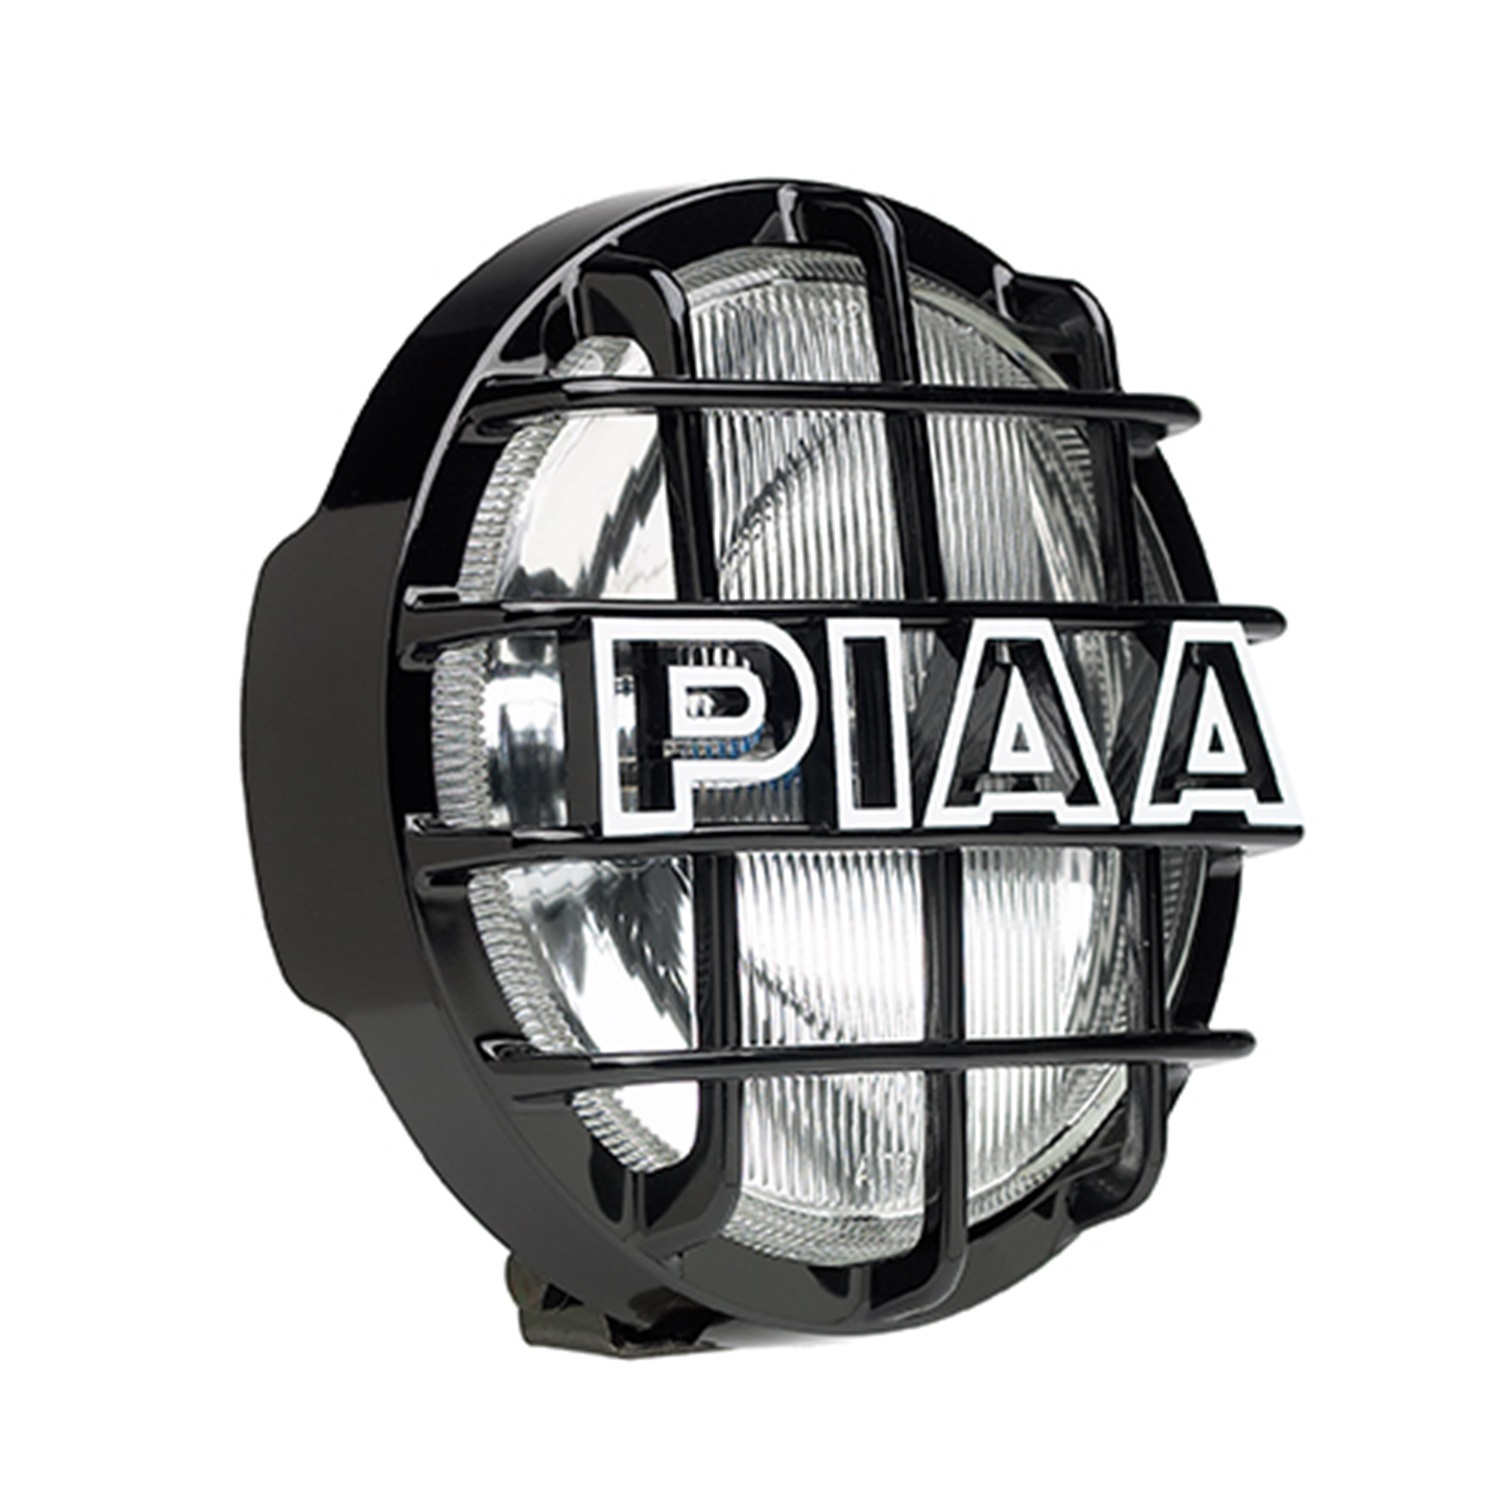 PIAA PIAA 73526 520 Xtreme White All Terrain Driving Lamp Kit